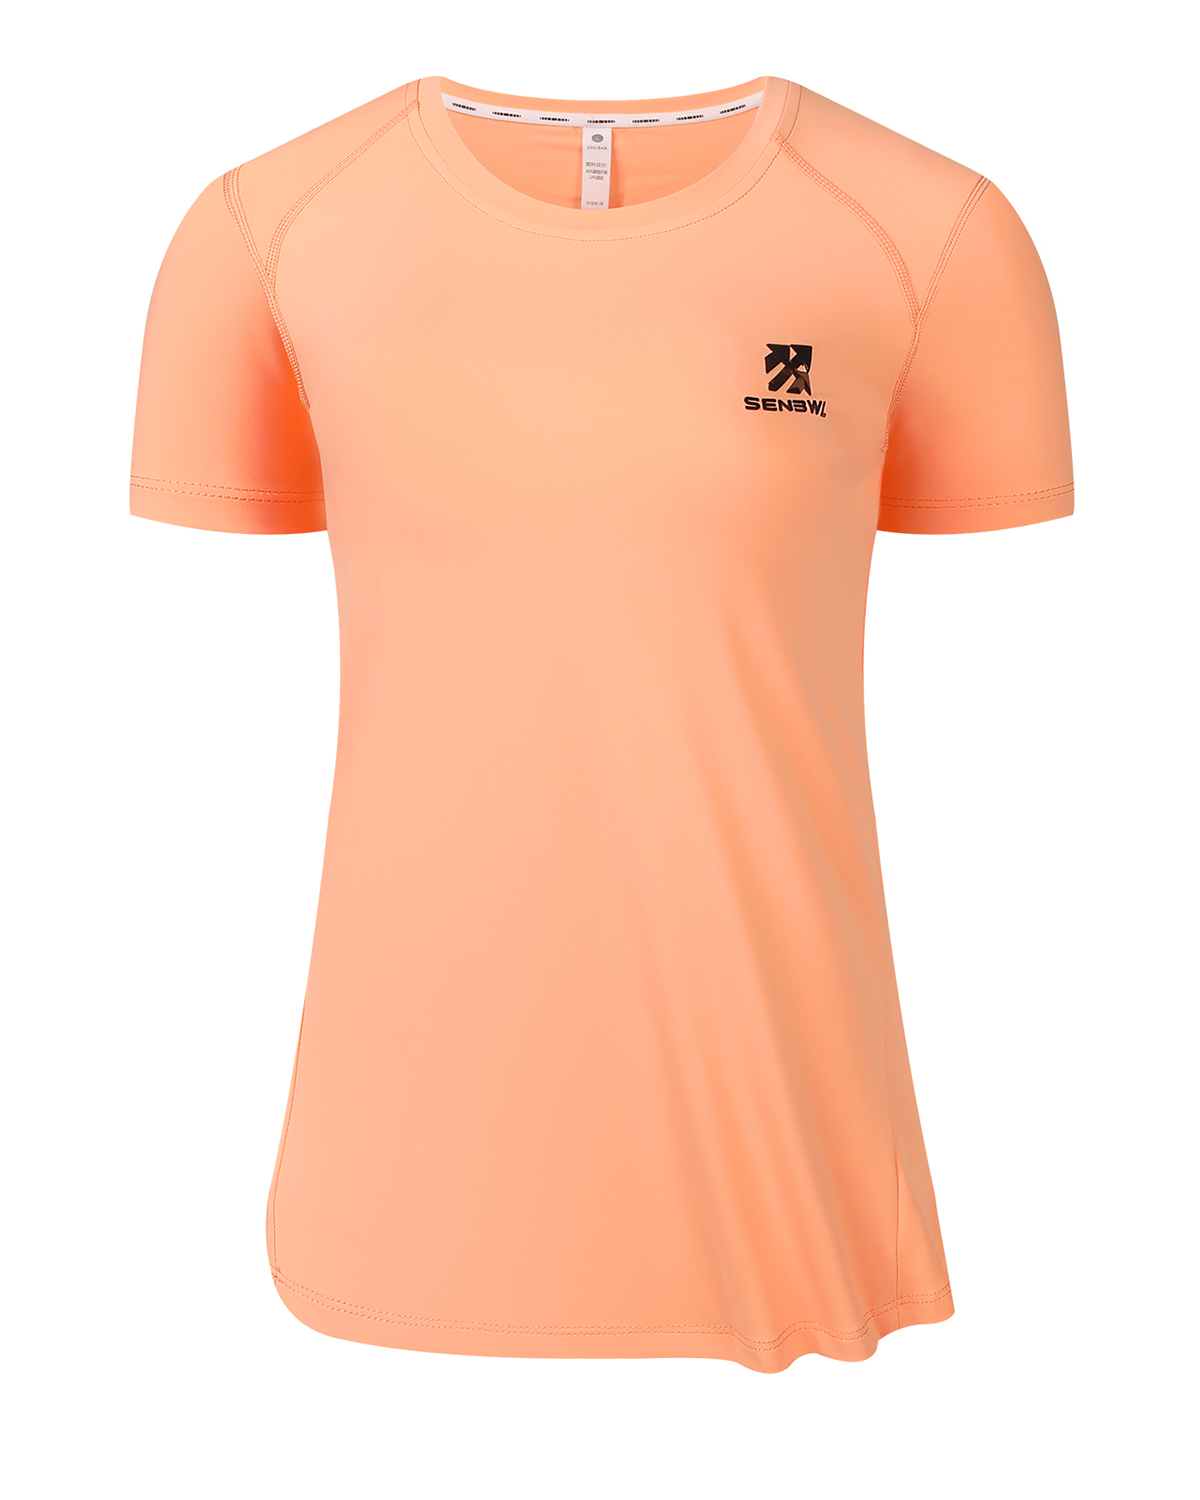 Senbwl Women's Quick Drying T-Shirts Workout Top-Senbwl Sports